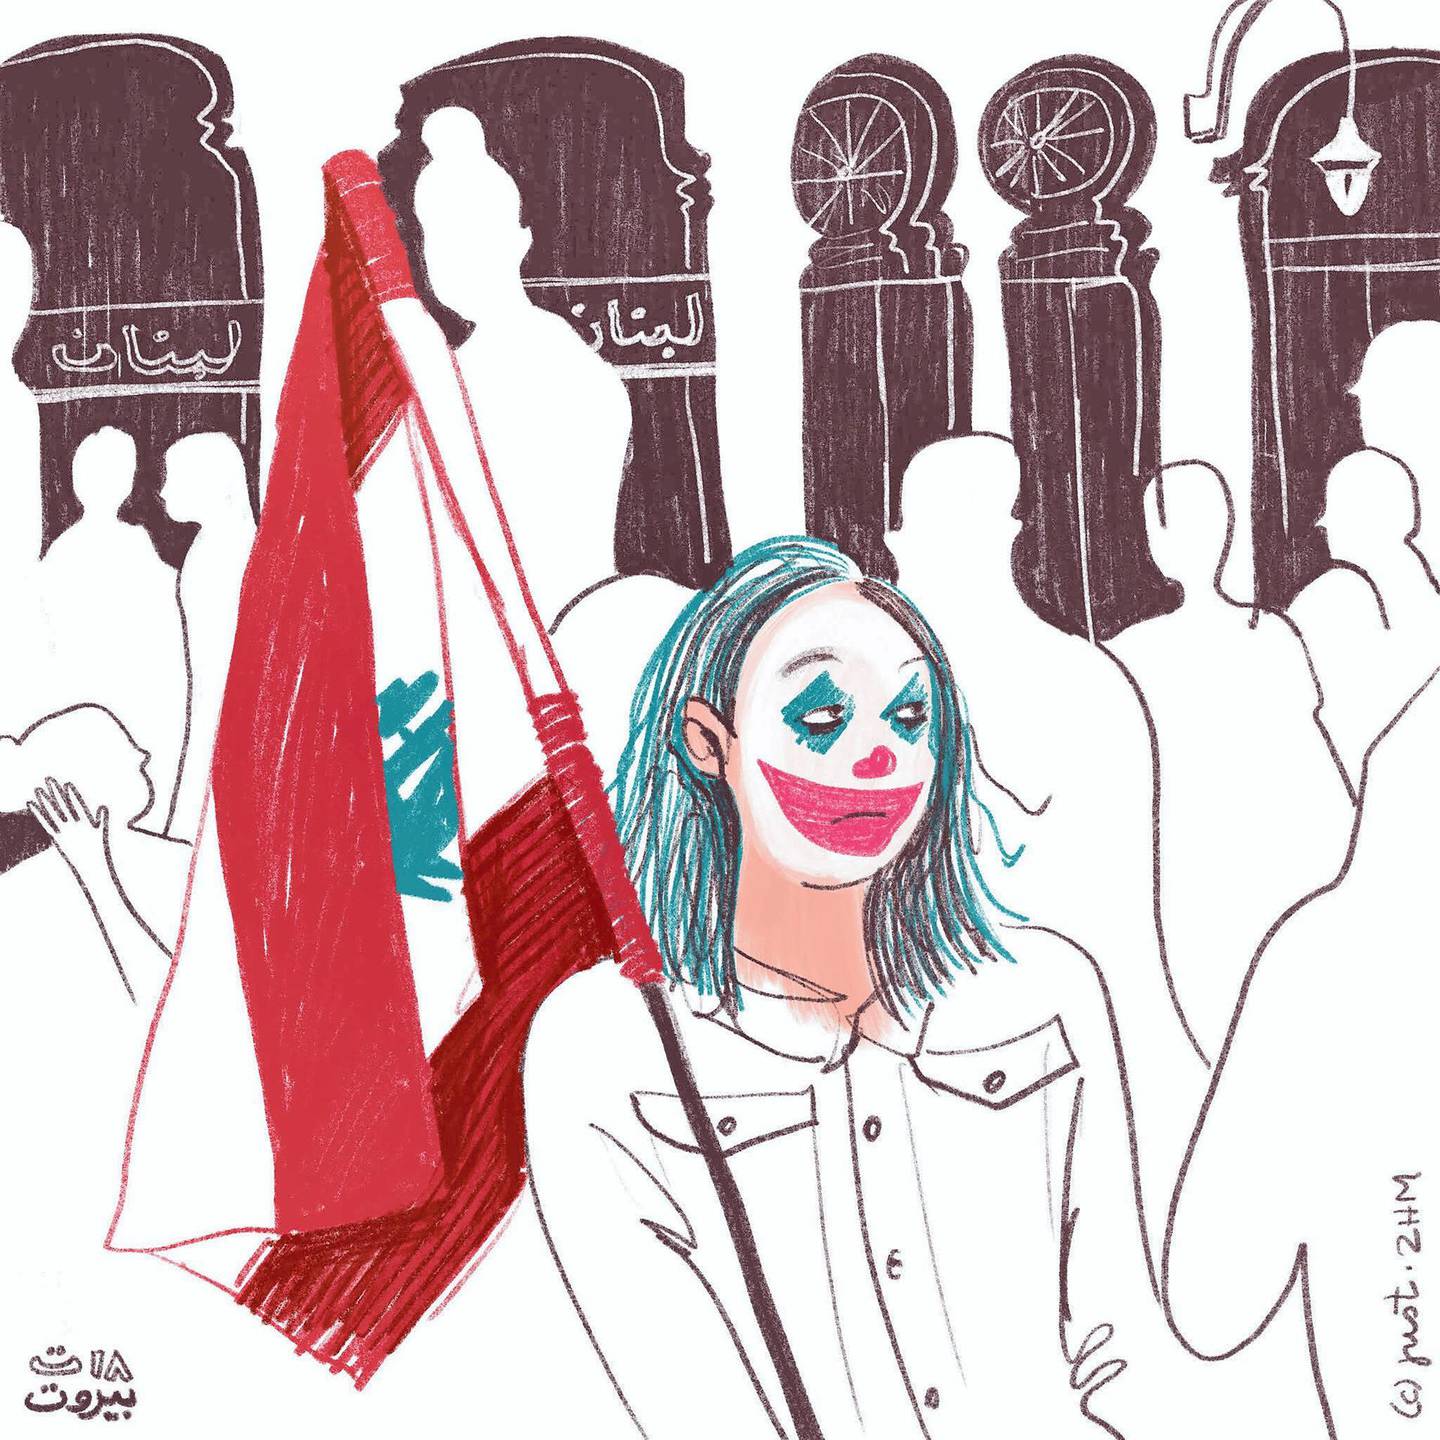 A photo of a woman in a Joker mask reworked by artist Zarifi Haidar, who creates works in the colour of Lebanon’s flag. Zarifi Haidar